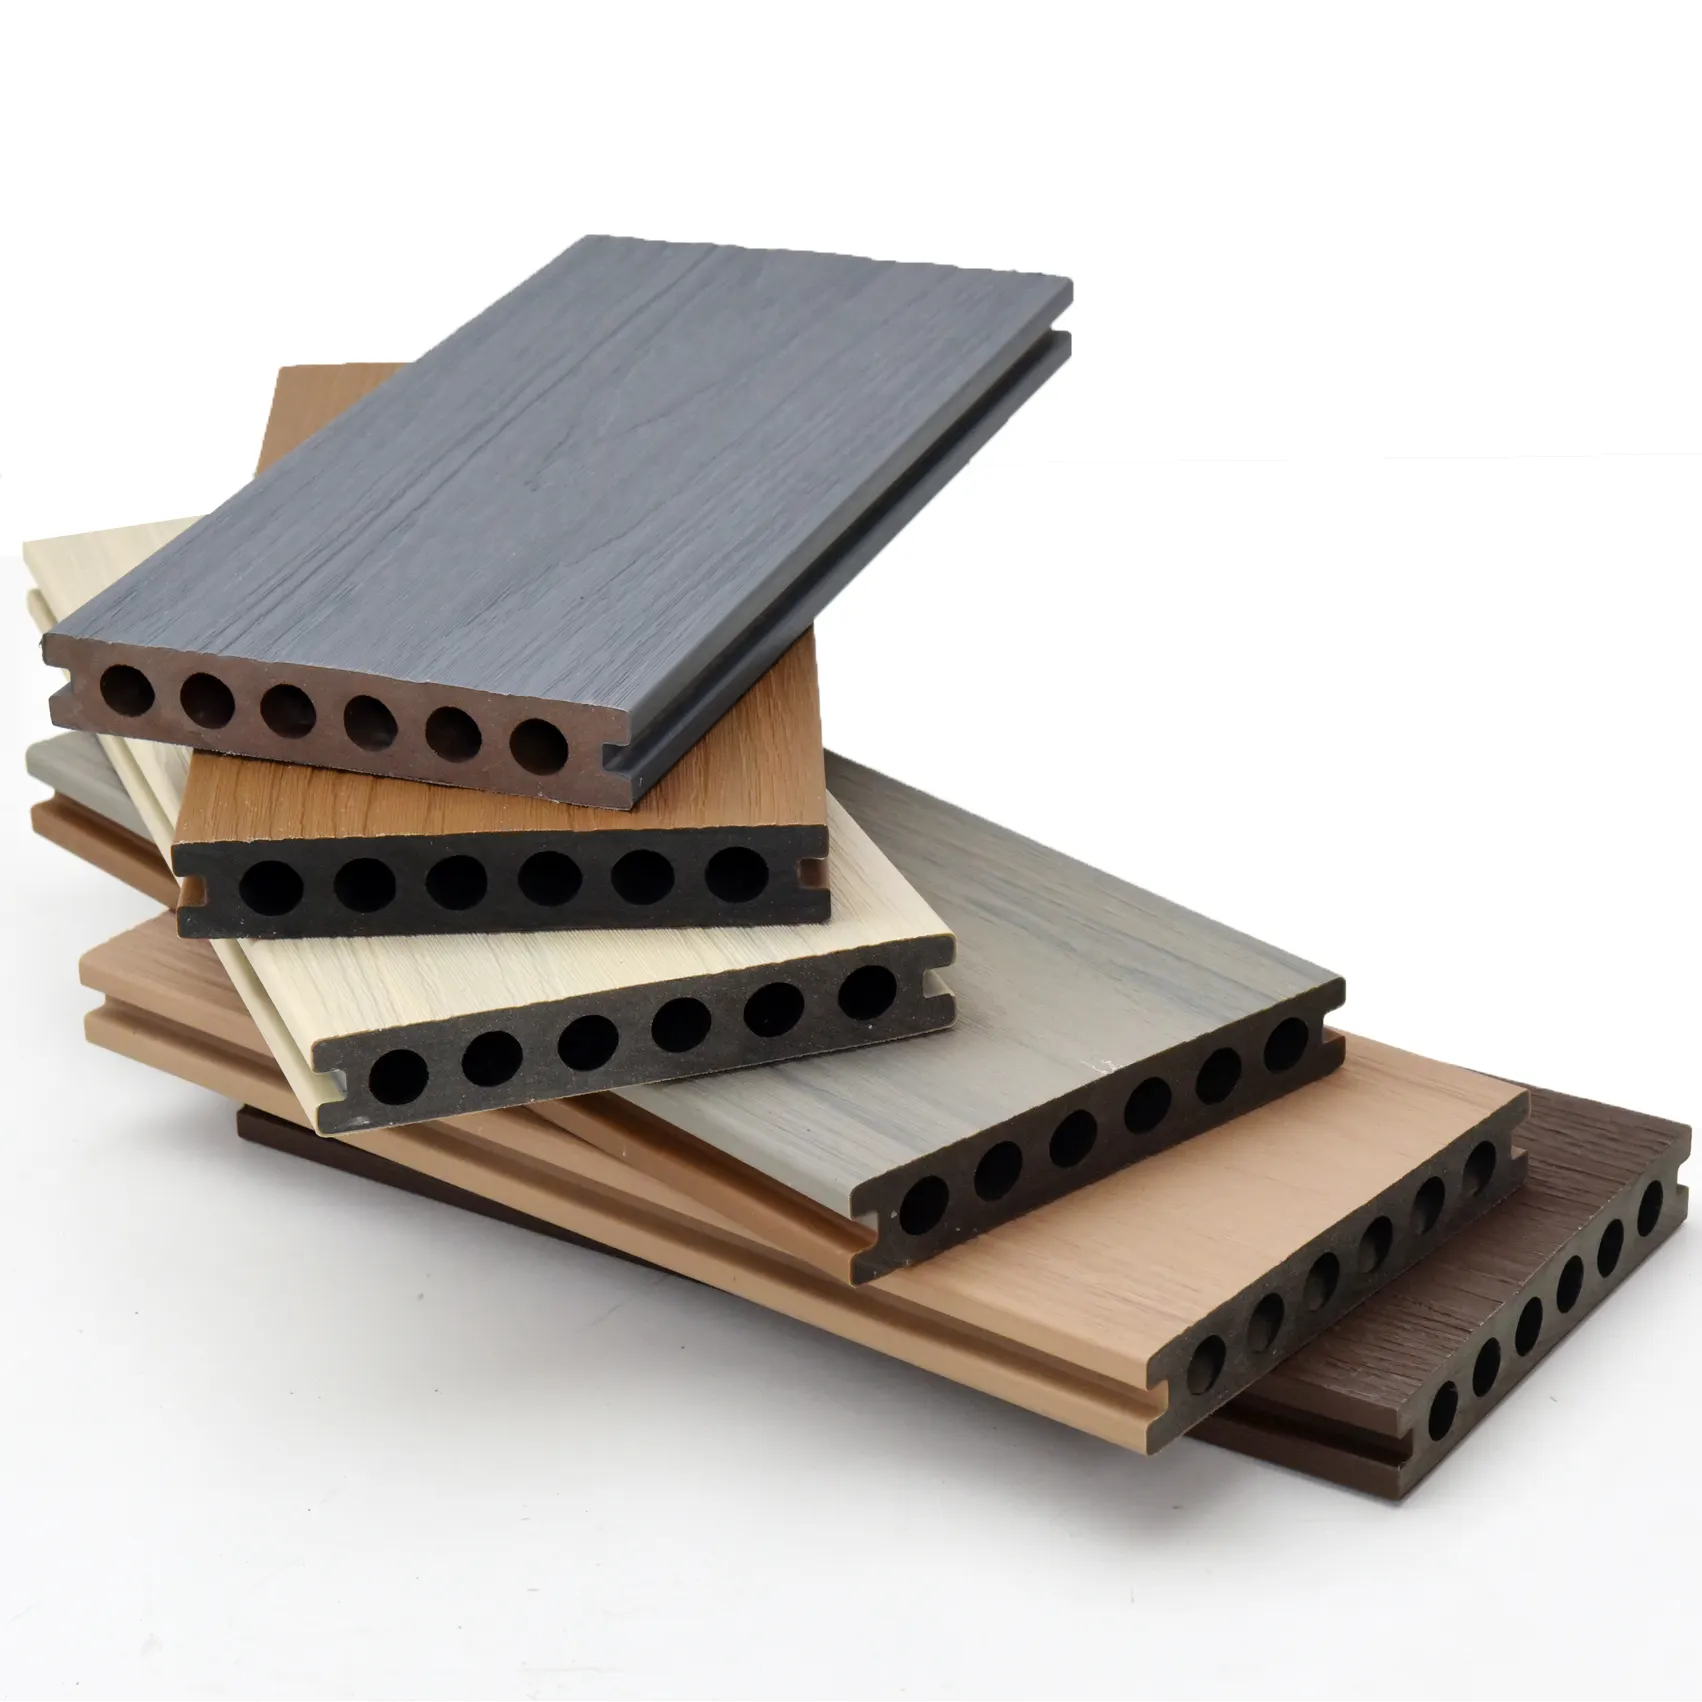 Waterproof floor WPC co-extrusion decking composite engineered flooring outdoor embossed wood grain decking planks